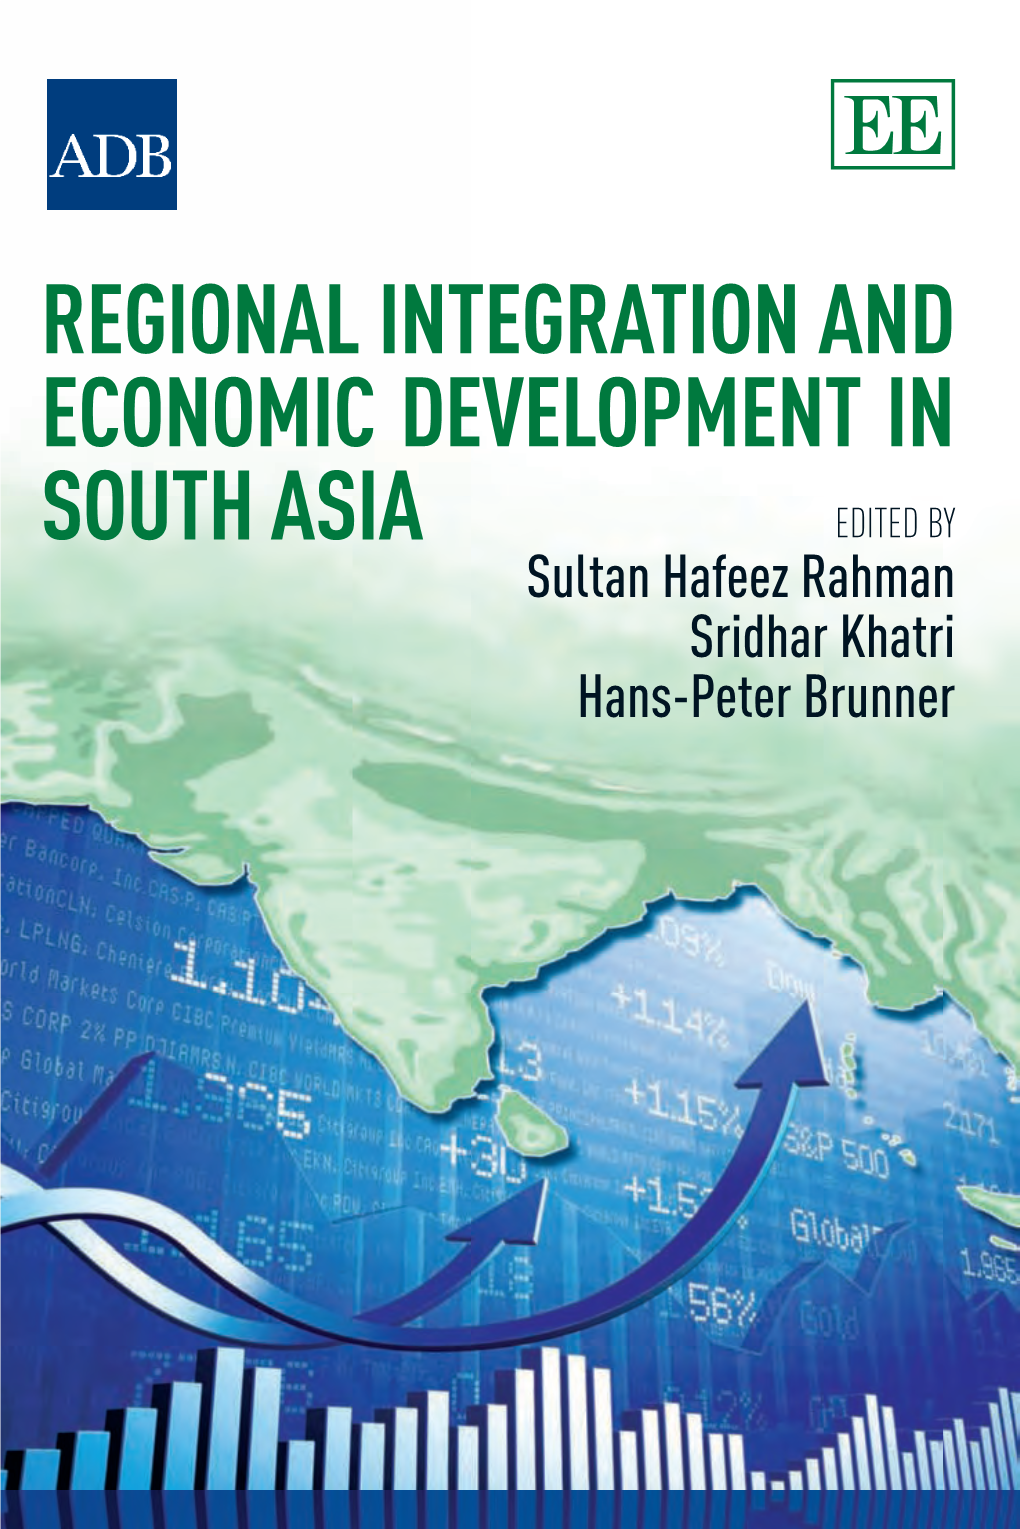 Regional Integration and Economic Development in South Asia Regional Integration and Economic Development in South Asia